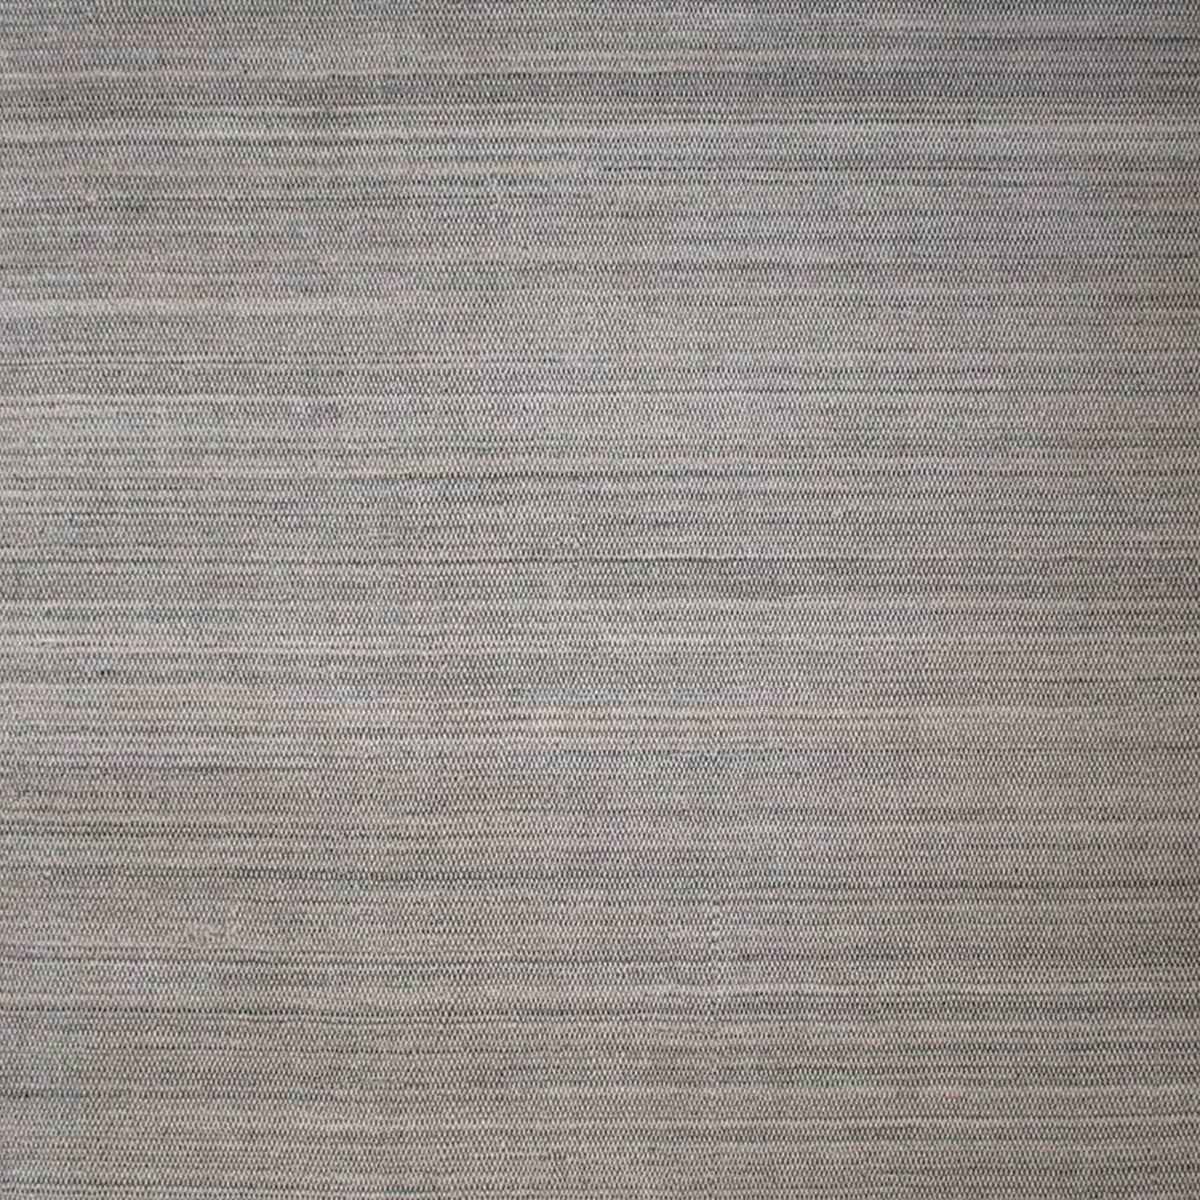 Mystique Rug - Ivory / Grey 250cm x 350cm